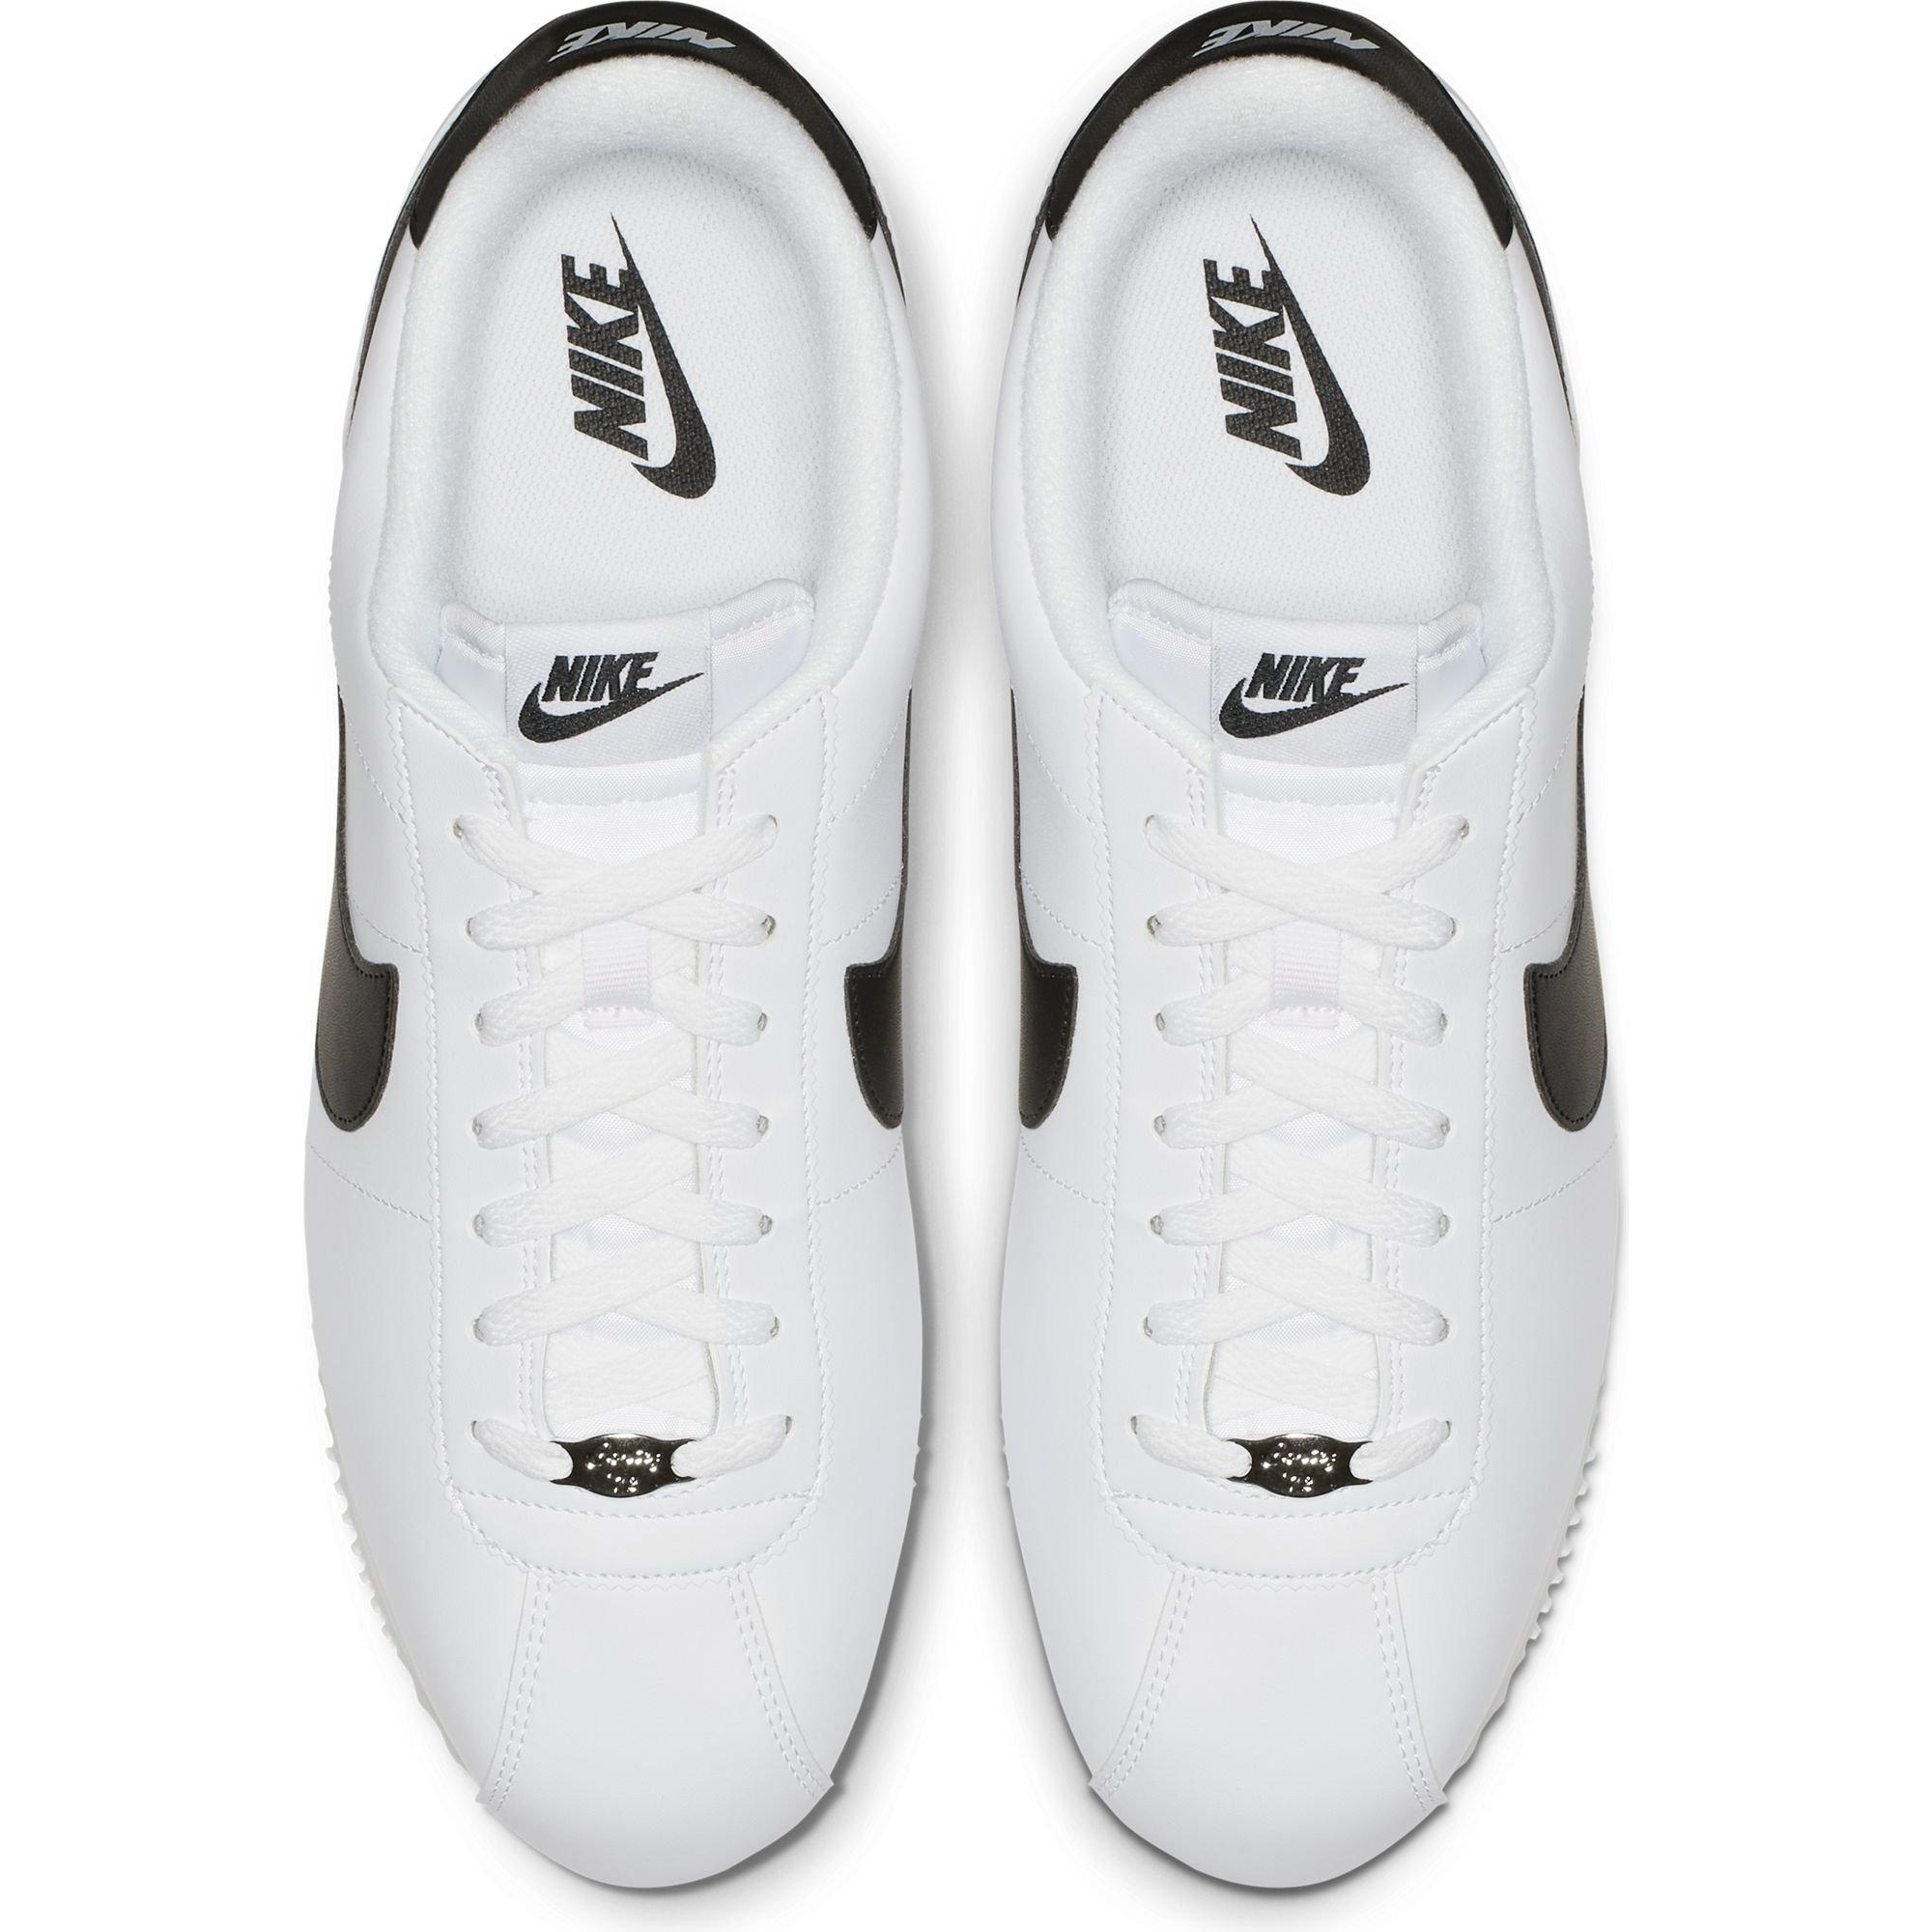 CUSTOM Nike Cortez X Adidas Gezelle Black Men's 9.5 Shoes CHPTR-3  KINJAZ BIEBER